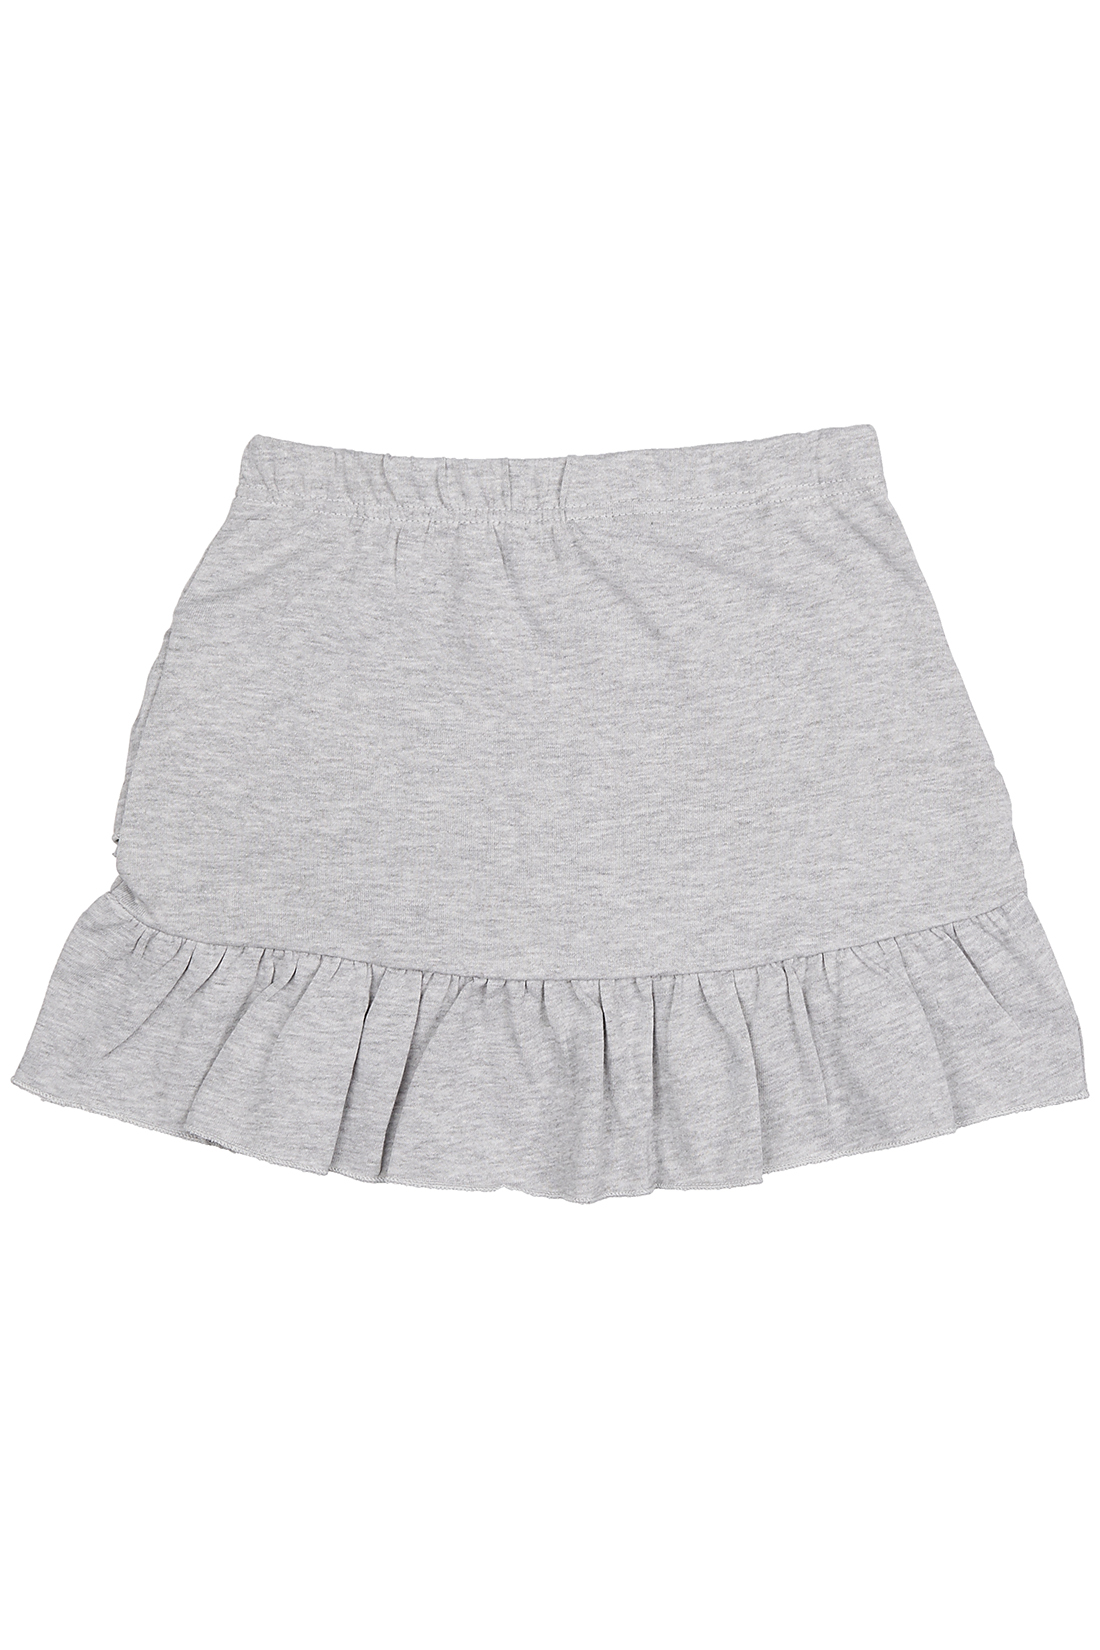 Юбка для девочки (арт. baon BJ478005), размер 158, цвет grey melange#серый Юбка для девочки (арт. baon BJ478005) - фото 3